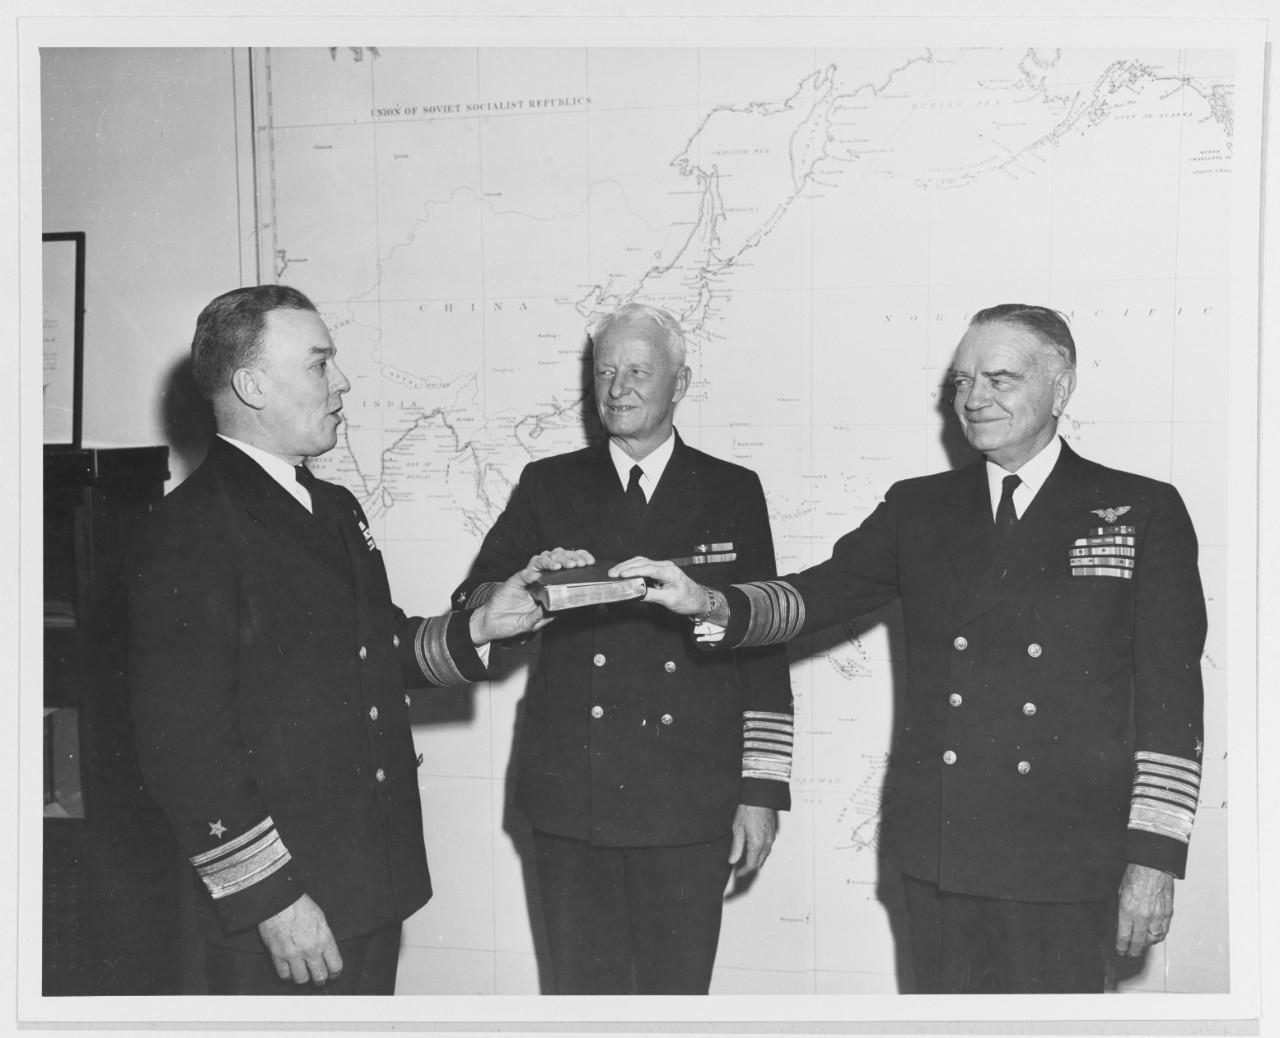 Fleet Admiral Chester W. Nimitz, USN, and Fleet Admiral William F. Halsey, USN